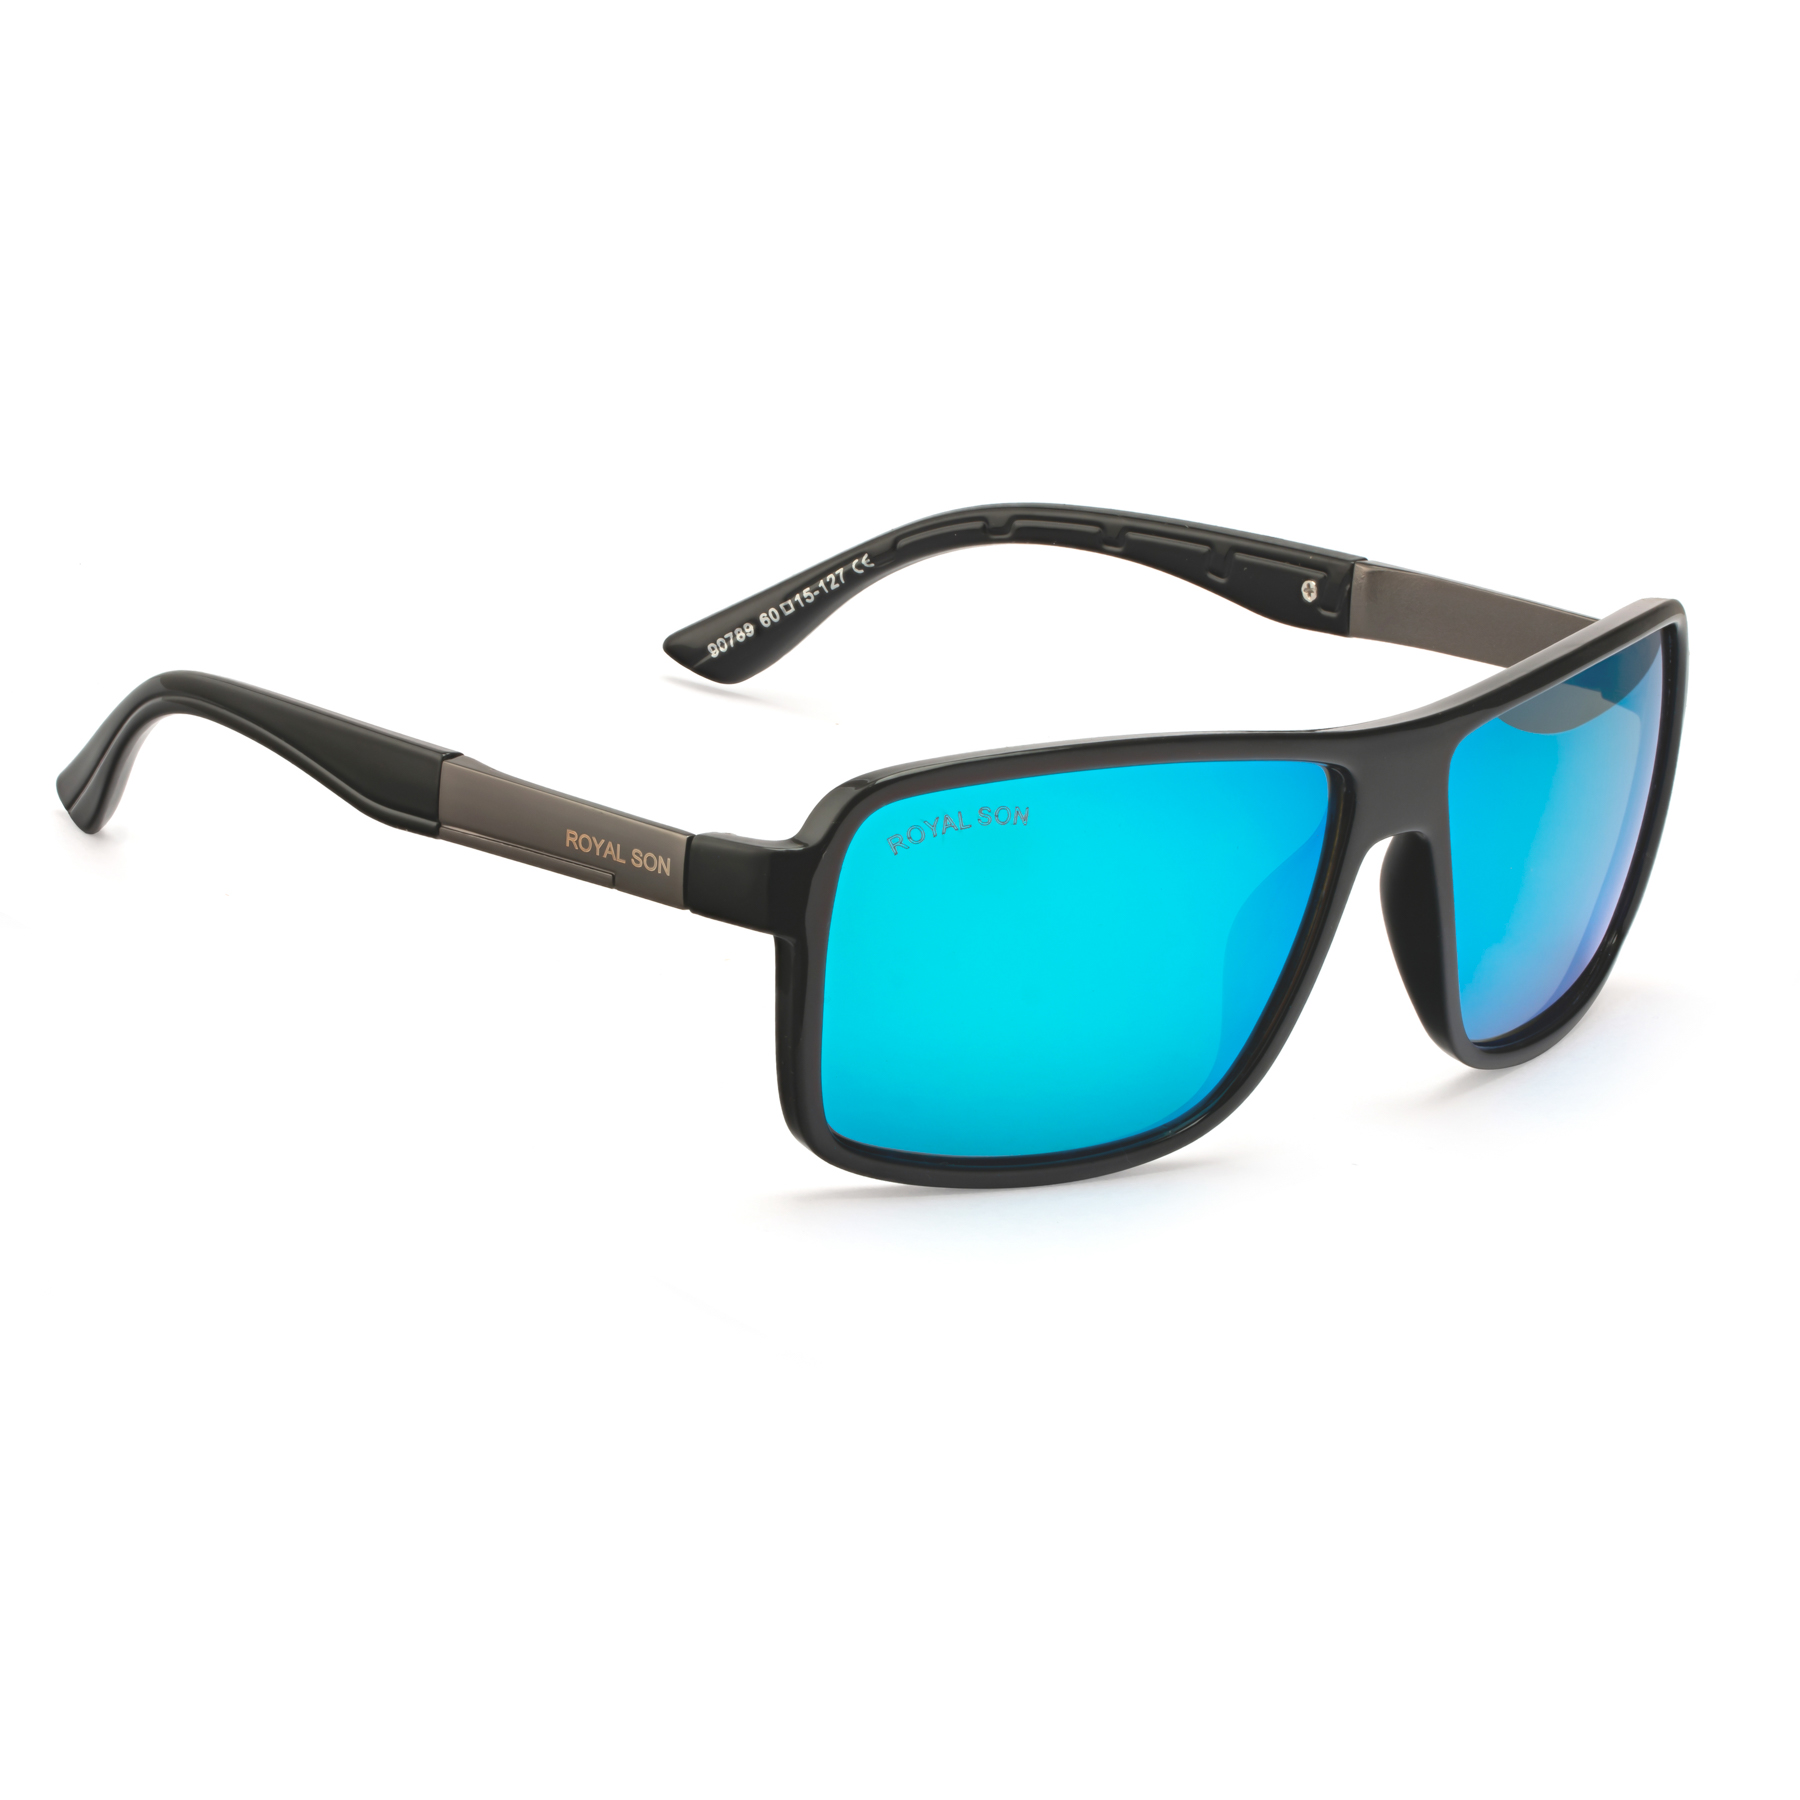 Royal Son Polarized Rectangular Sunglasses for Men Stylish – Blue